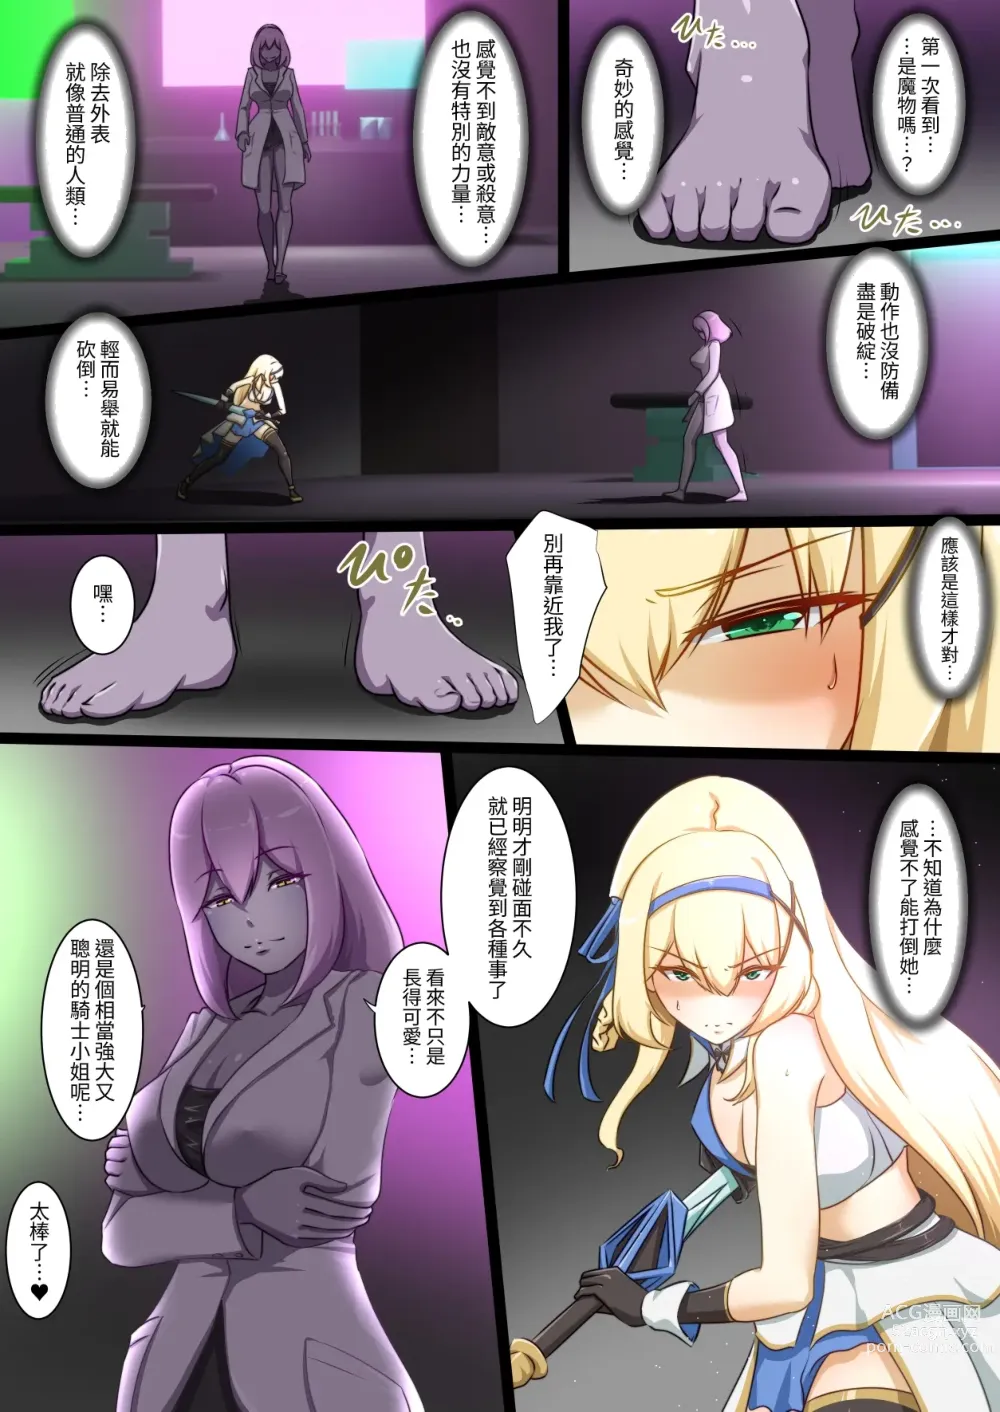 Page 5 of doujinshi 公主骑士与色色敌人战斗并败北的故事